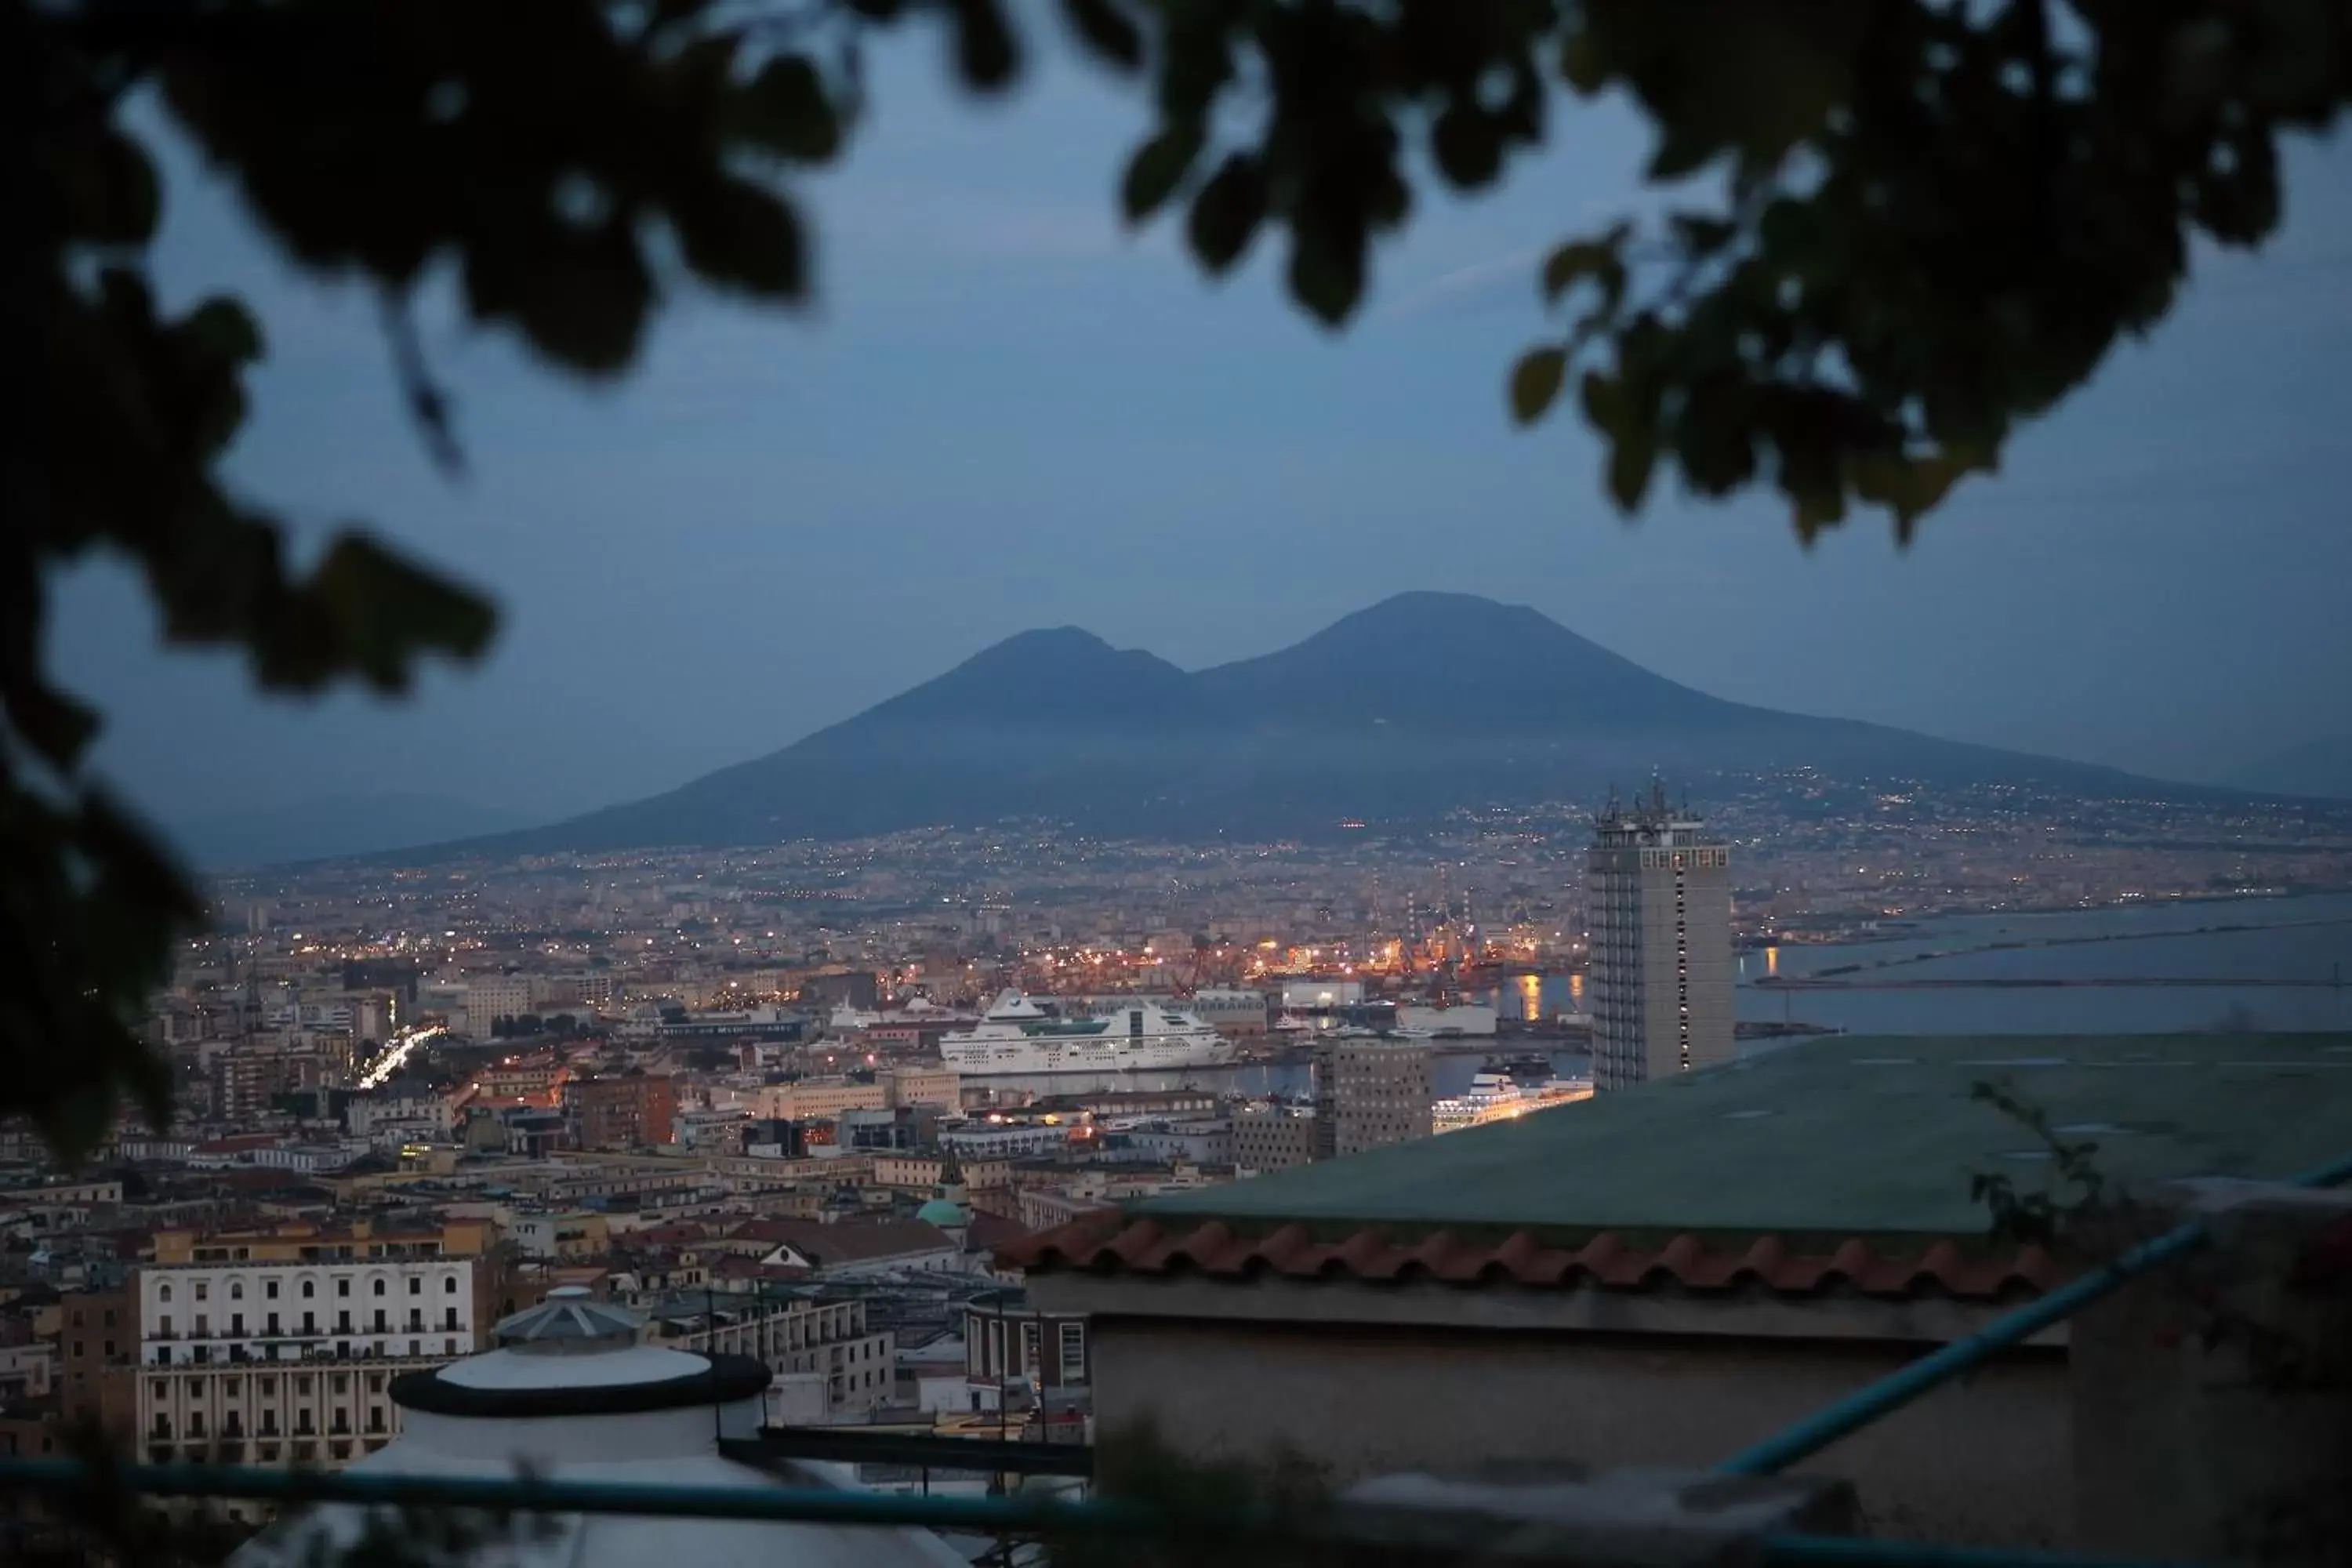 City view in San Francesco al Monte